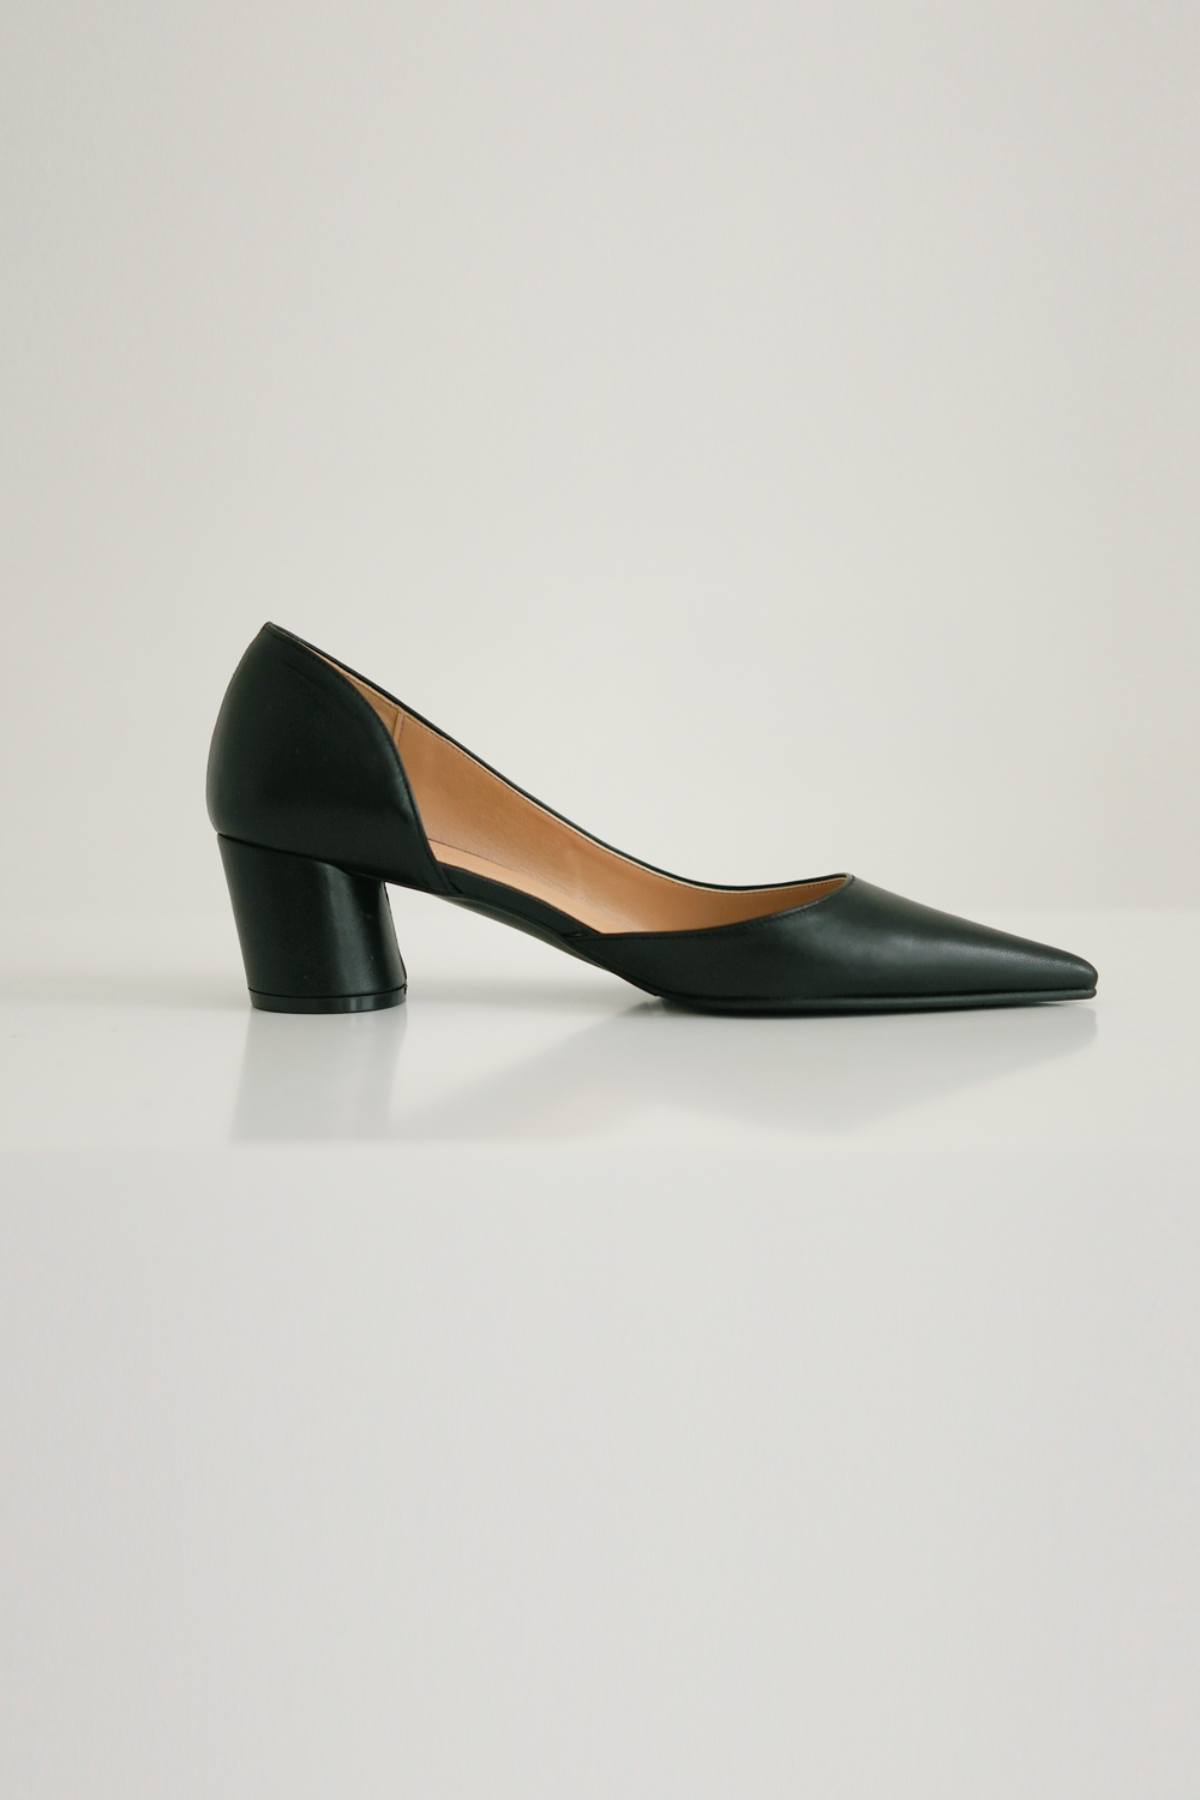 ANTHÈSE pin stiletto heel, black